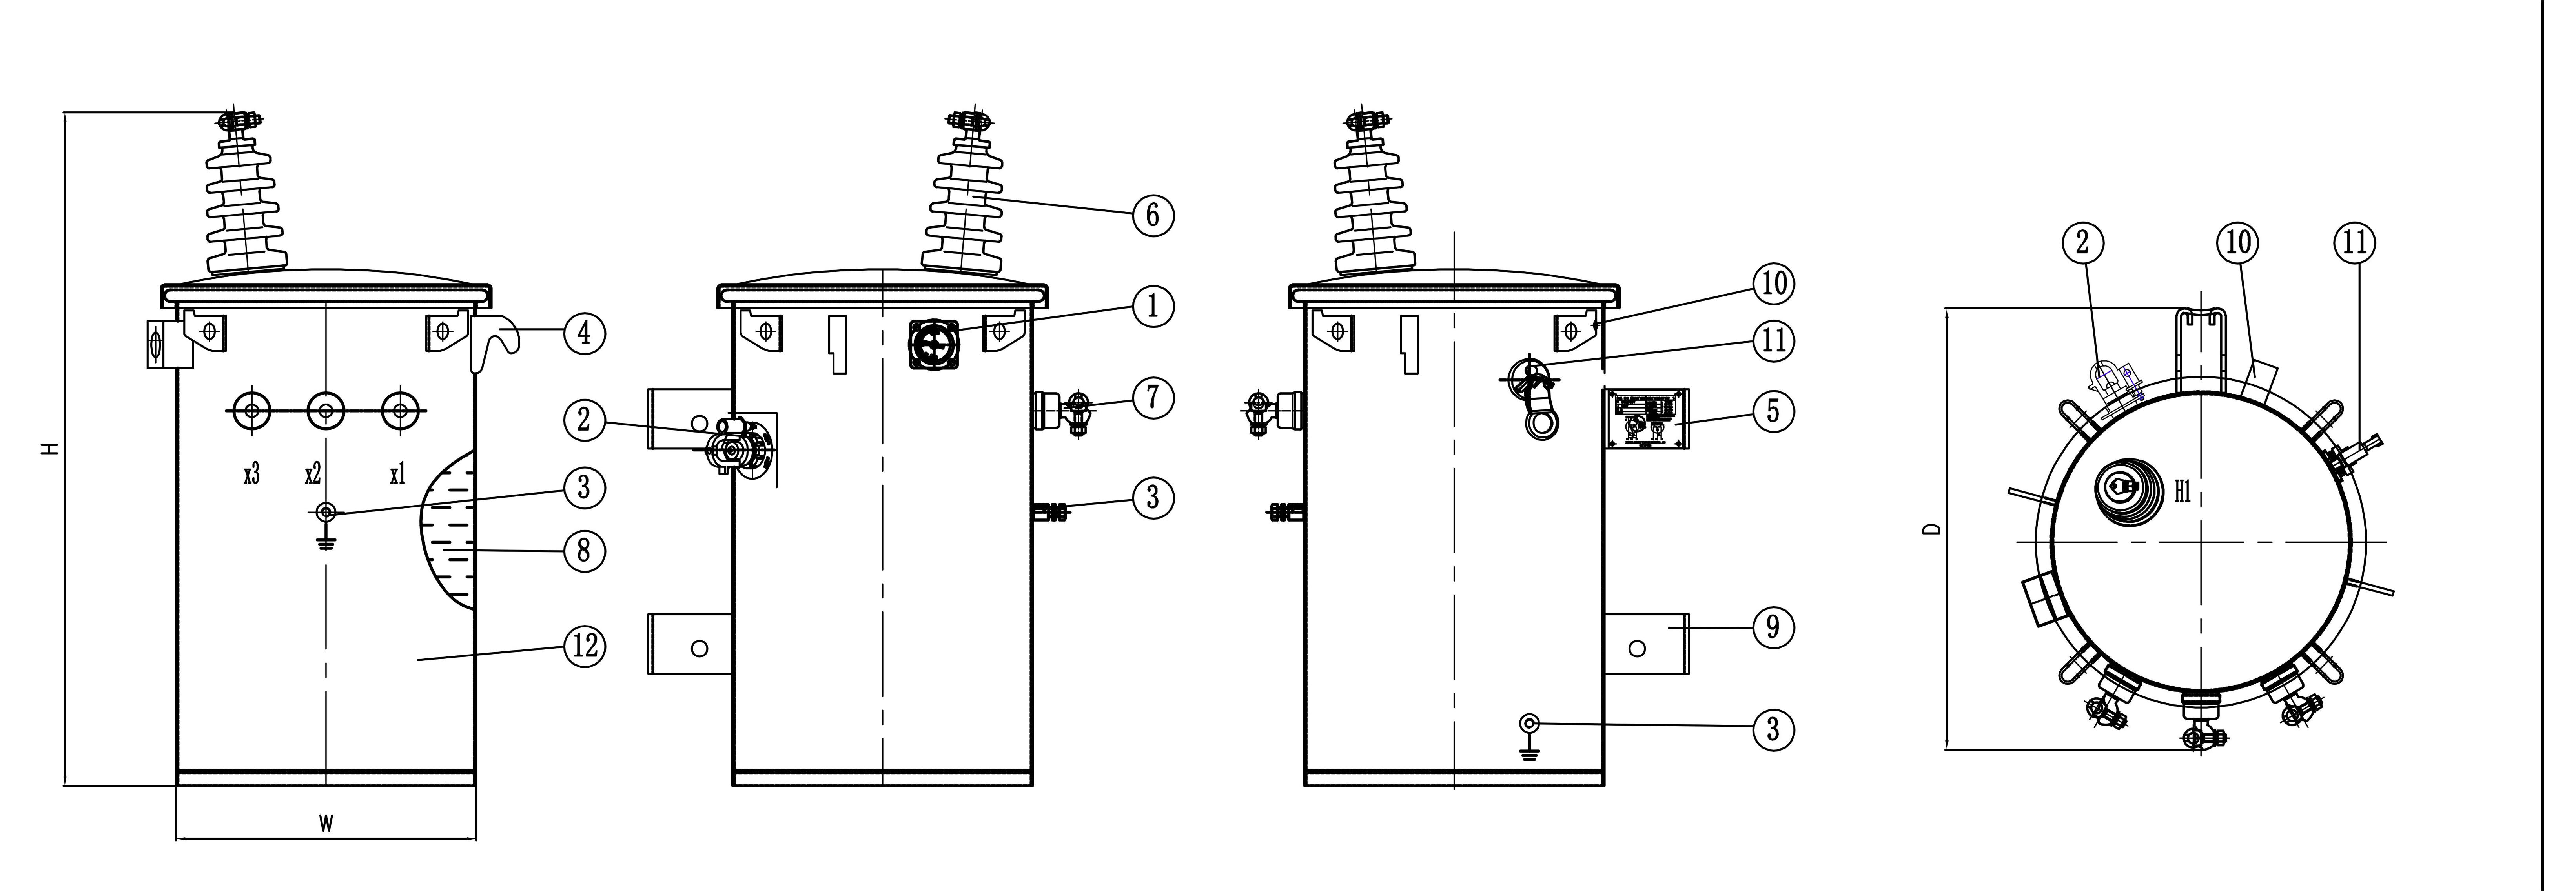 Single phase pole mounted transformer drawings